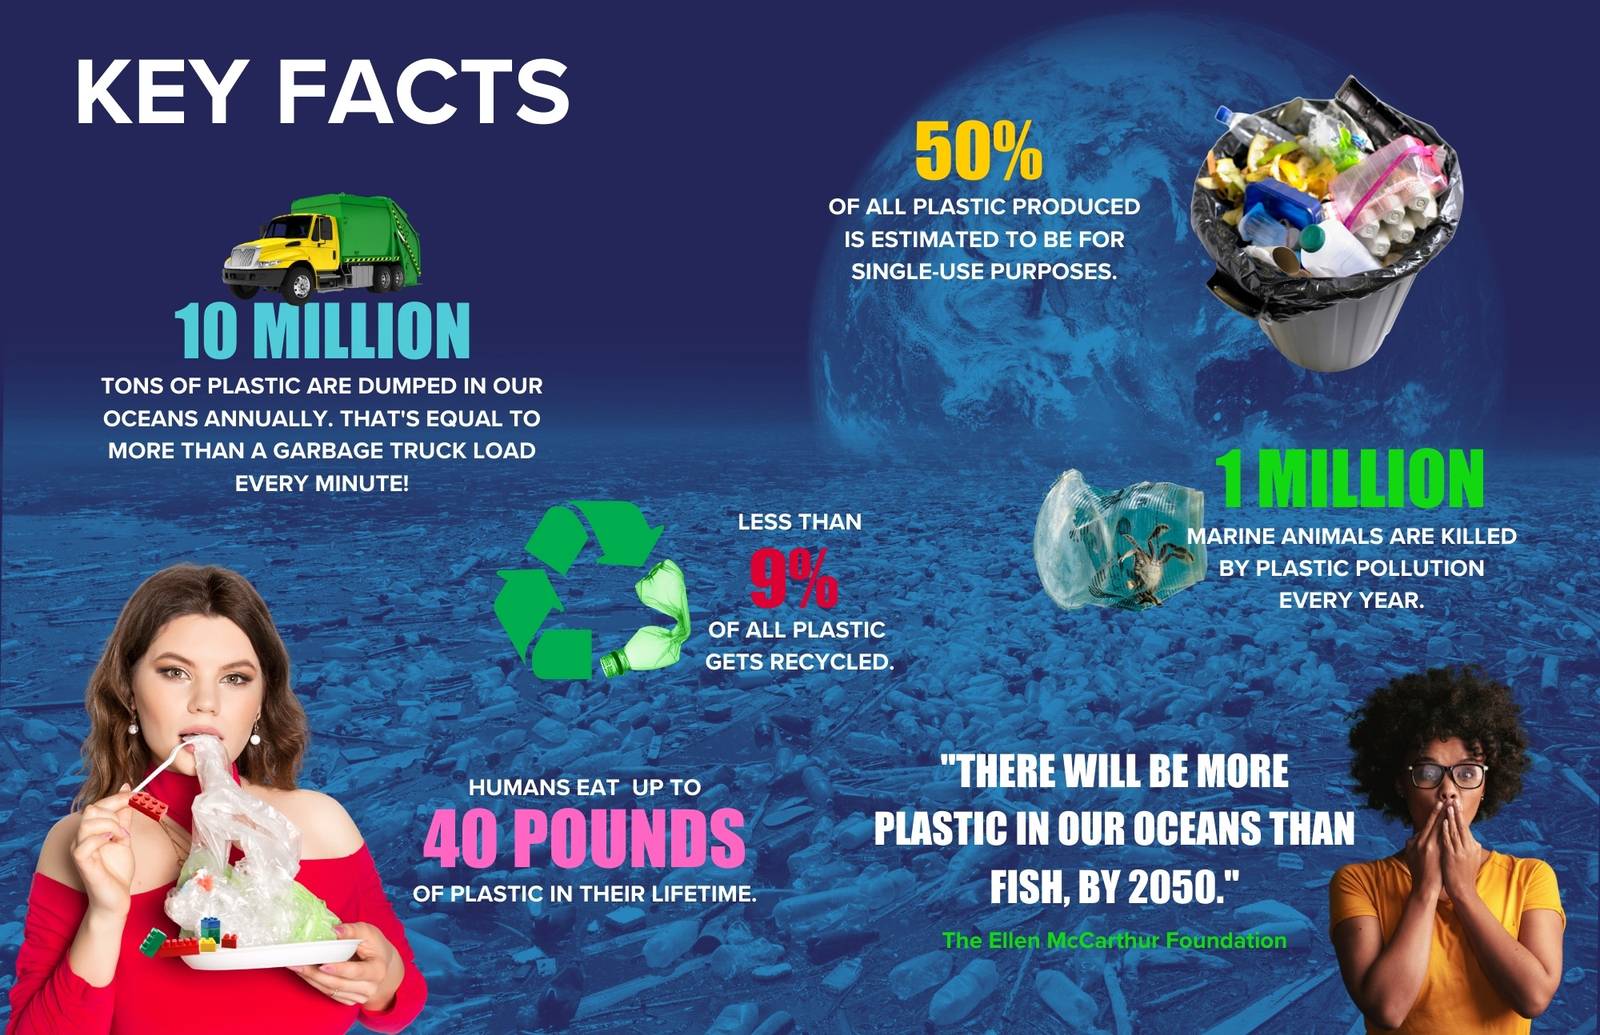 https://plasticoceans.org/wp-content/uploads/2021/01/plastic-pollution-facts.jpg